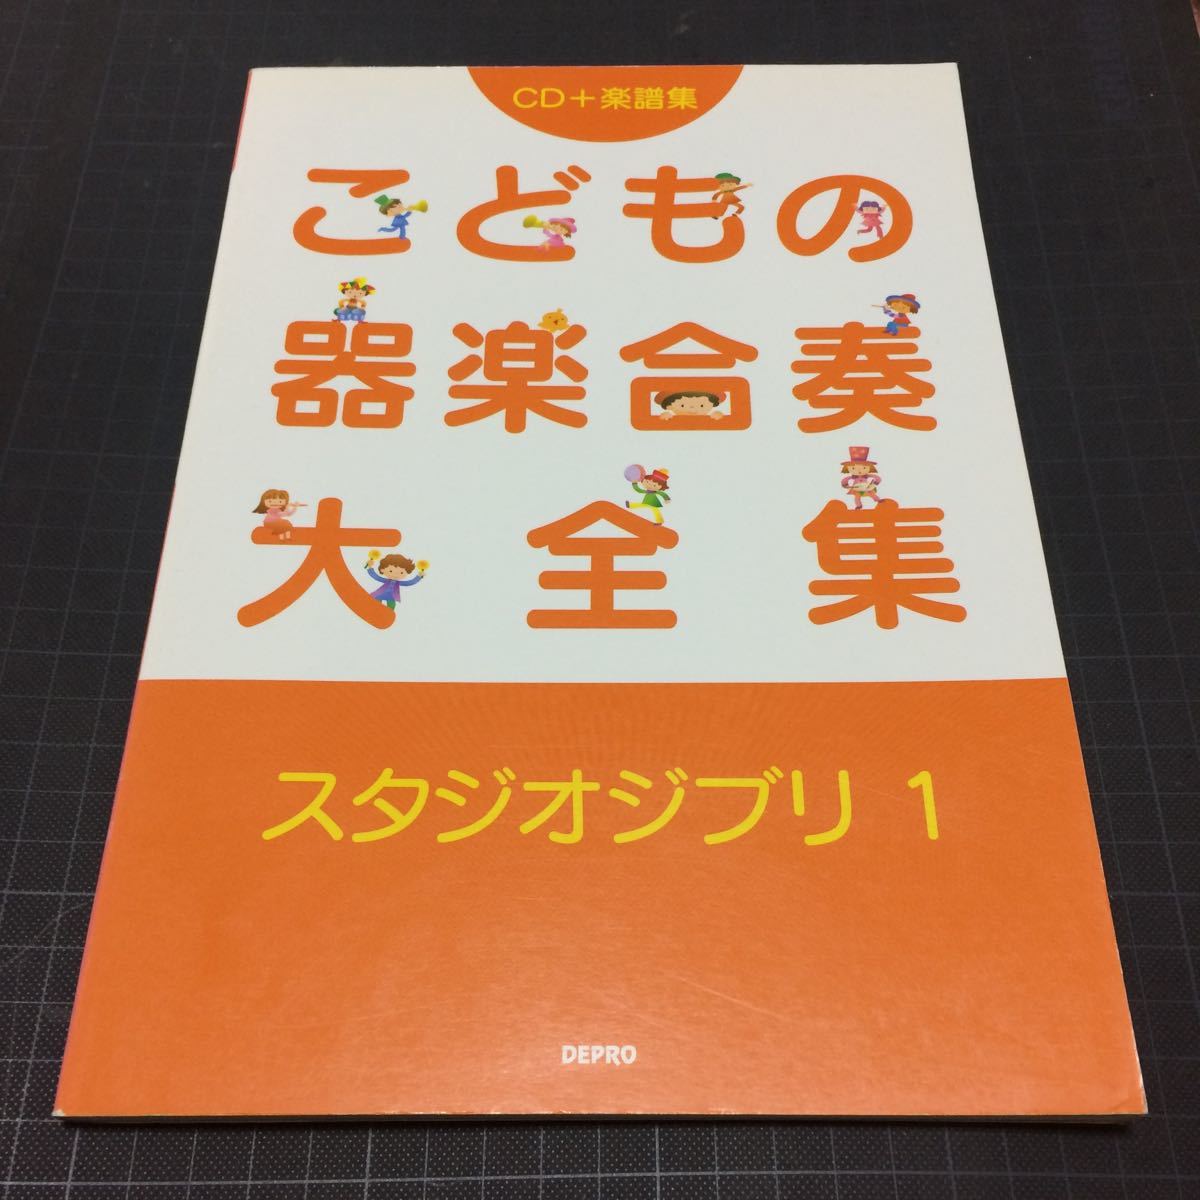 ko. thing instrumental music concert large complete set of works Studio Ghibli 1 CD+ musical score compilation CD unopened 